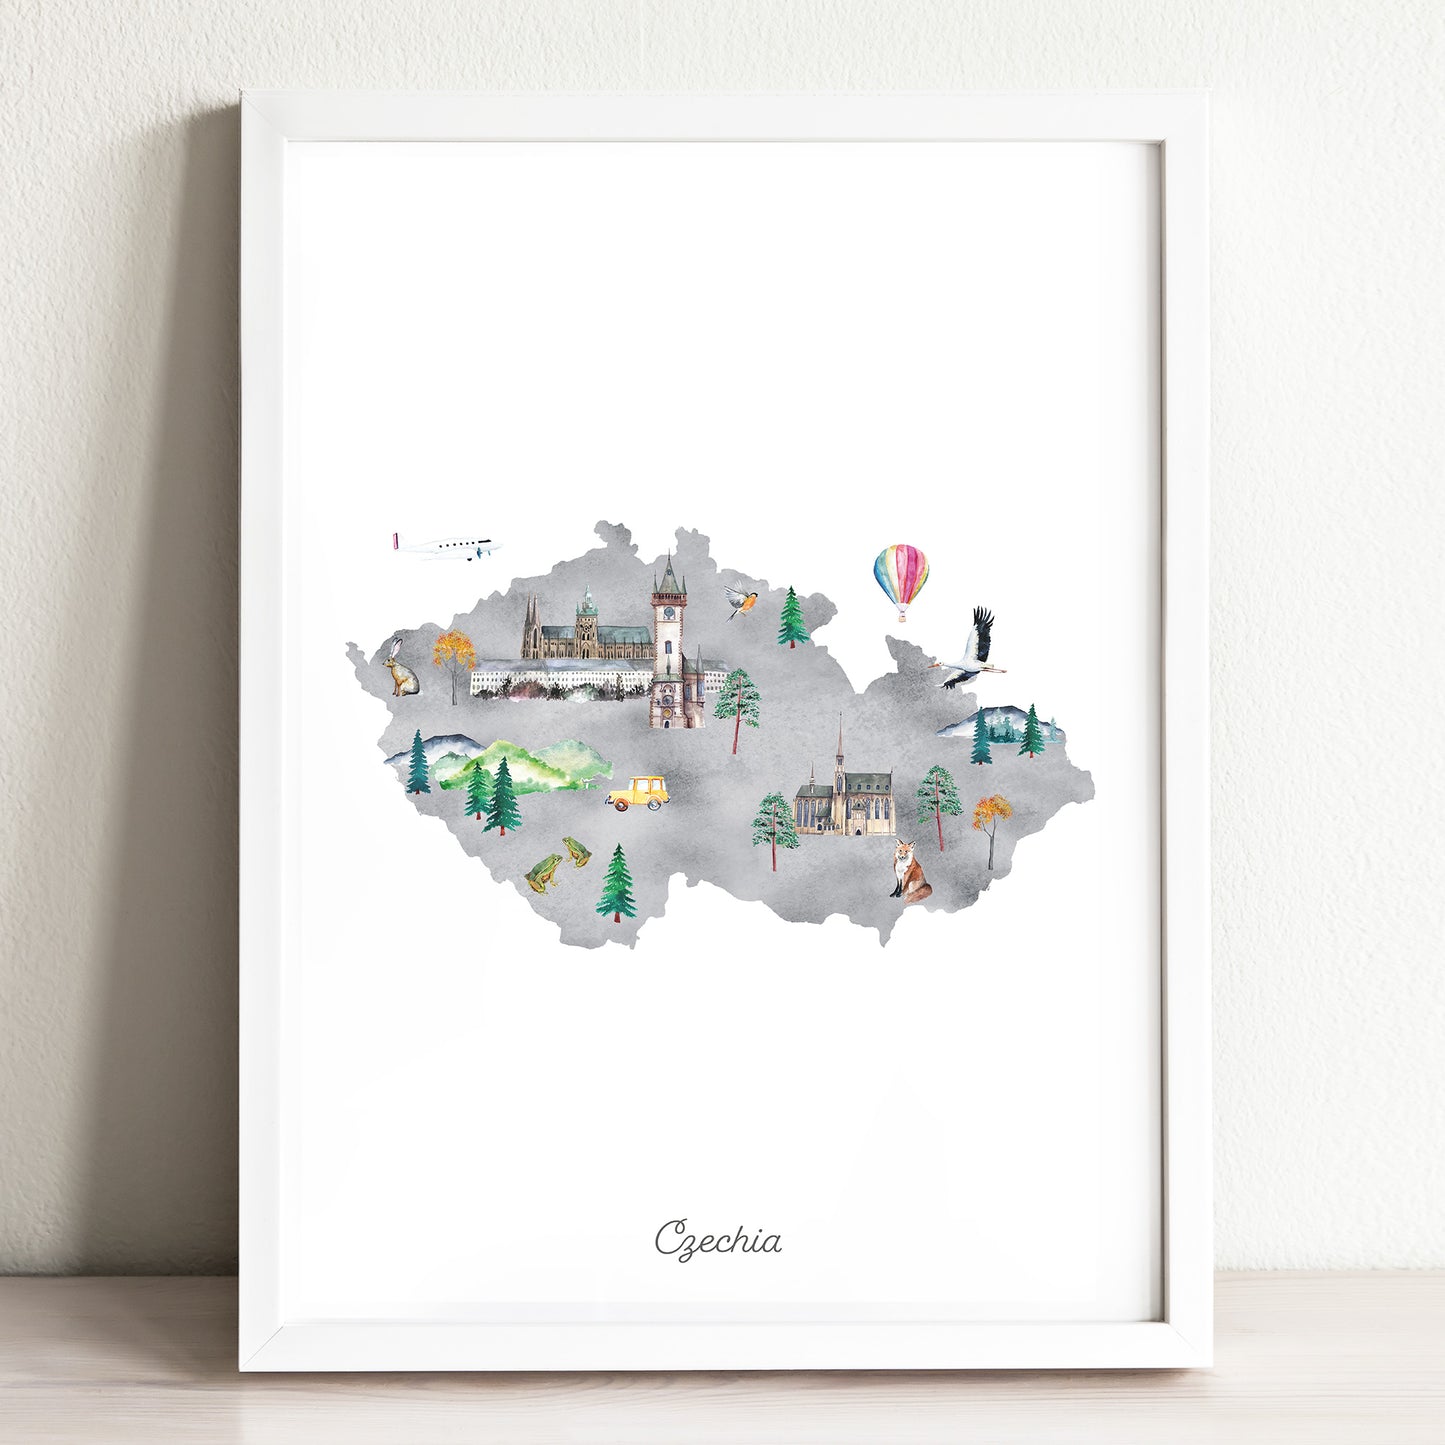 Czechia Illustrated Map Art Print